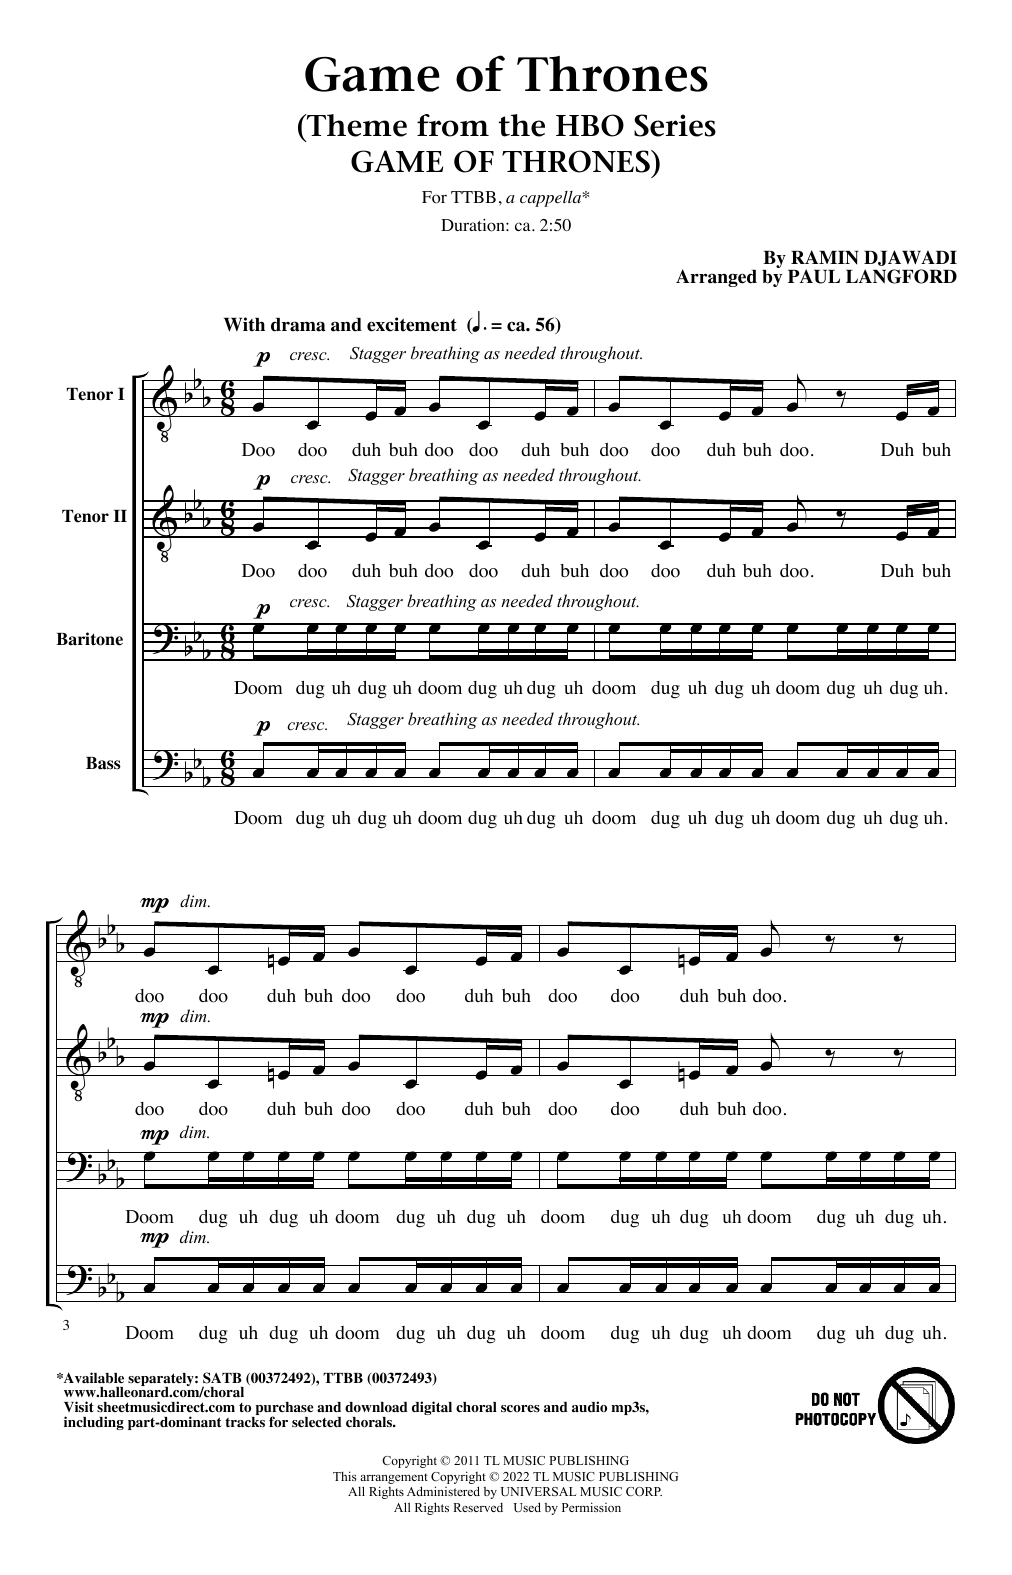 Download Ramin Djawadi Game Of Thrones (arr. Paul Langford) Sheet Music and learn how to play TTBB Choir PDF digital score in minutes